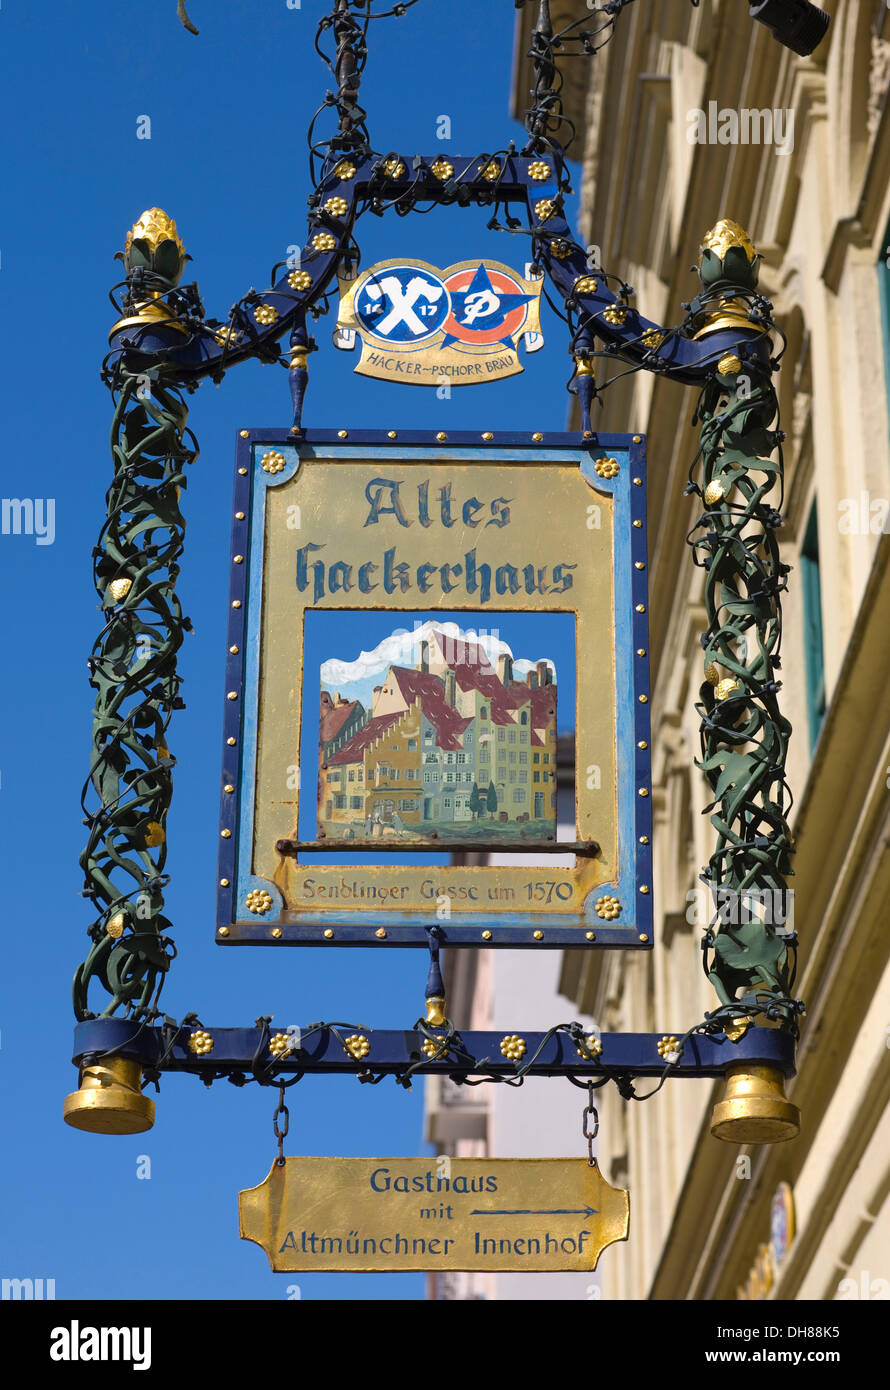 Hanging sign, Altes Hackerhaus, Sendlinger Strasse, Altstadt-Lehel district, Munich, Bavaria Stock Photo